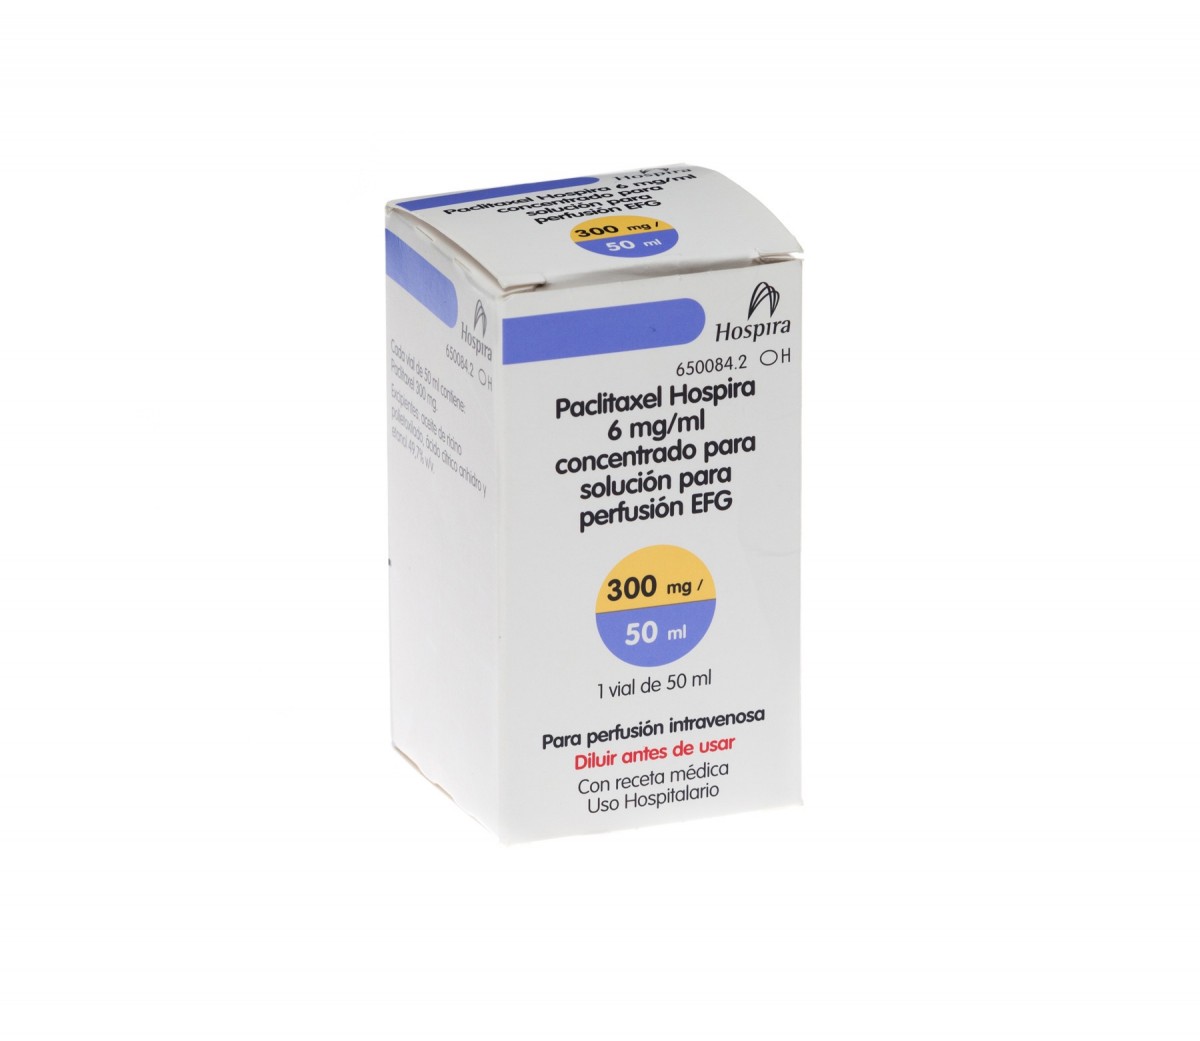 PACLITAXEL HOSPIRA 6 mg/ml CONCENTRADO PARA SOLUCION PARA PERFUSION EFG , 1 vial de 5 ml fotografía del envase.